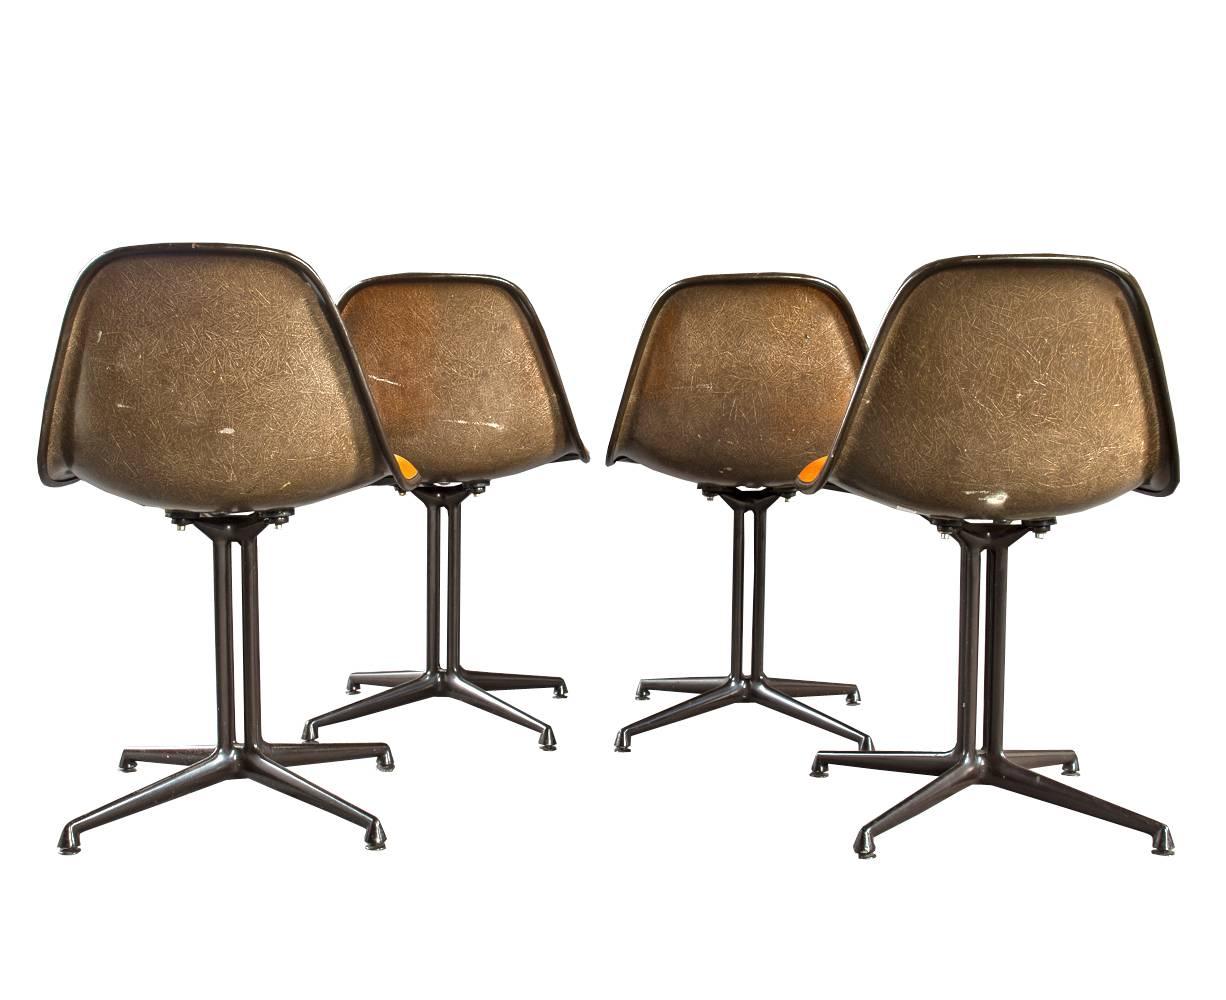 American Model La Fonda Chairs by Charles & Ray Eames